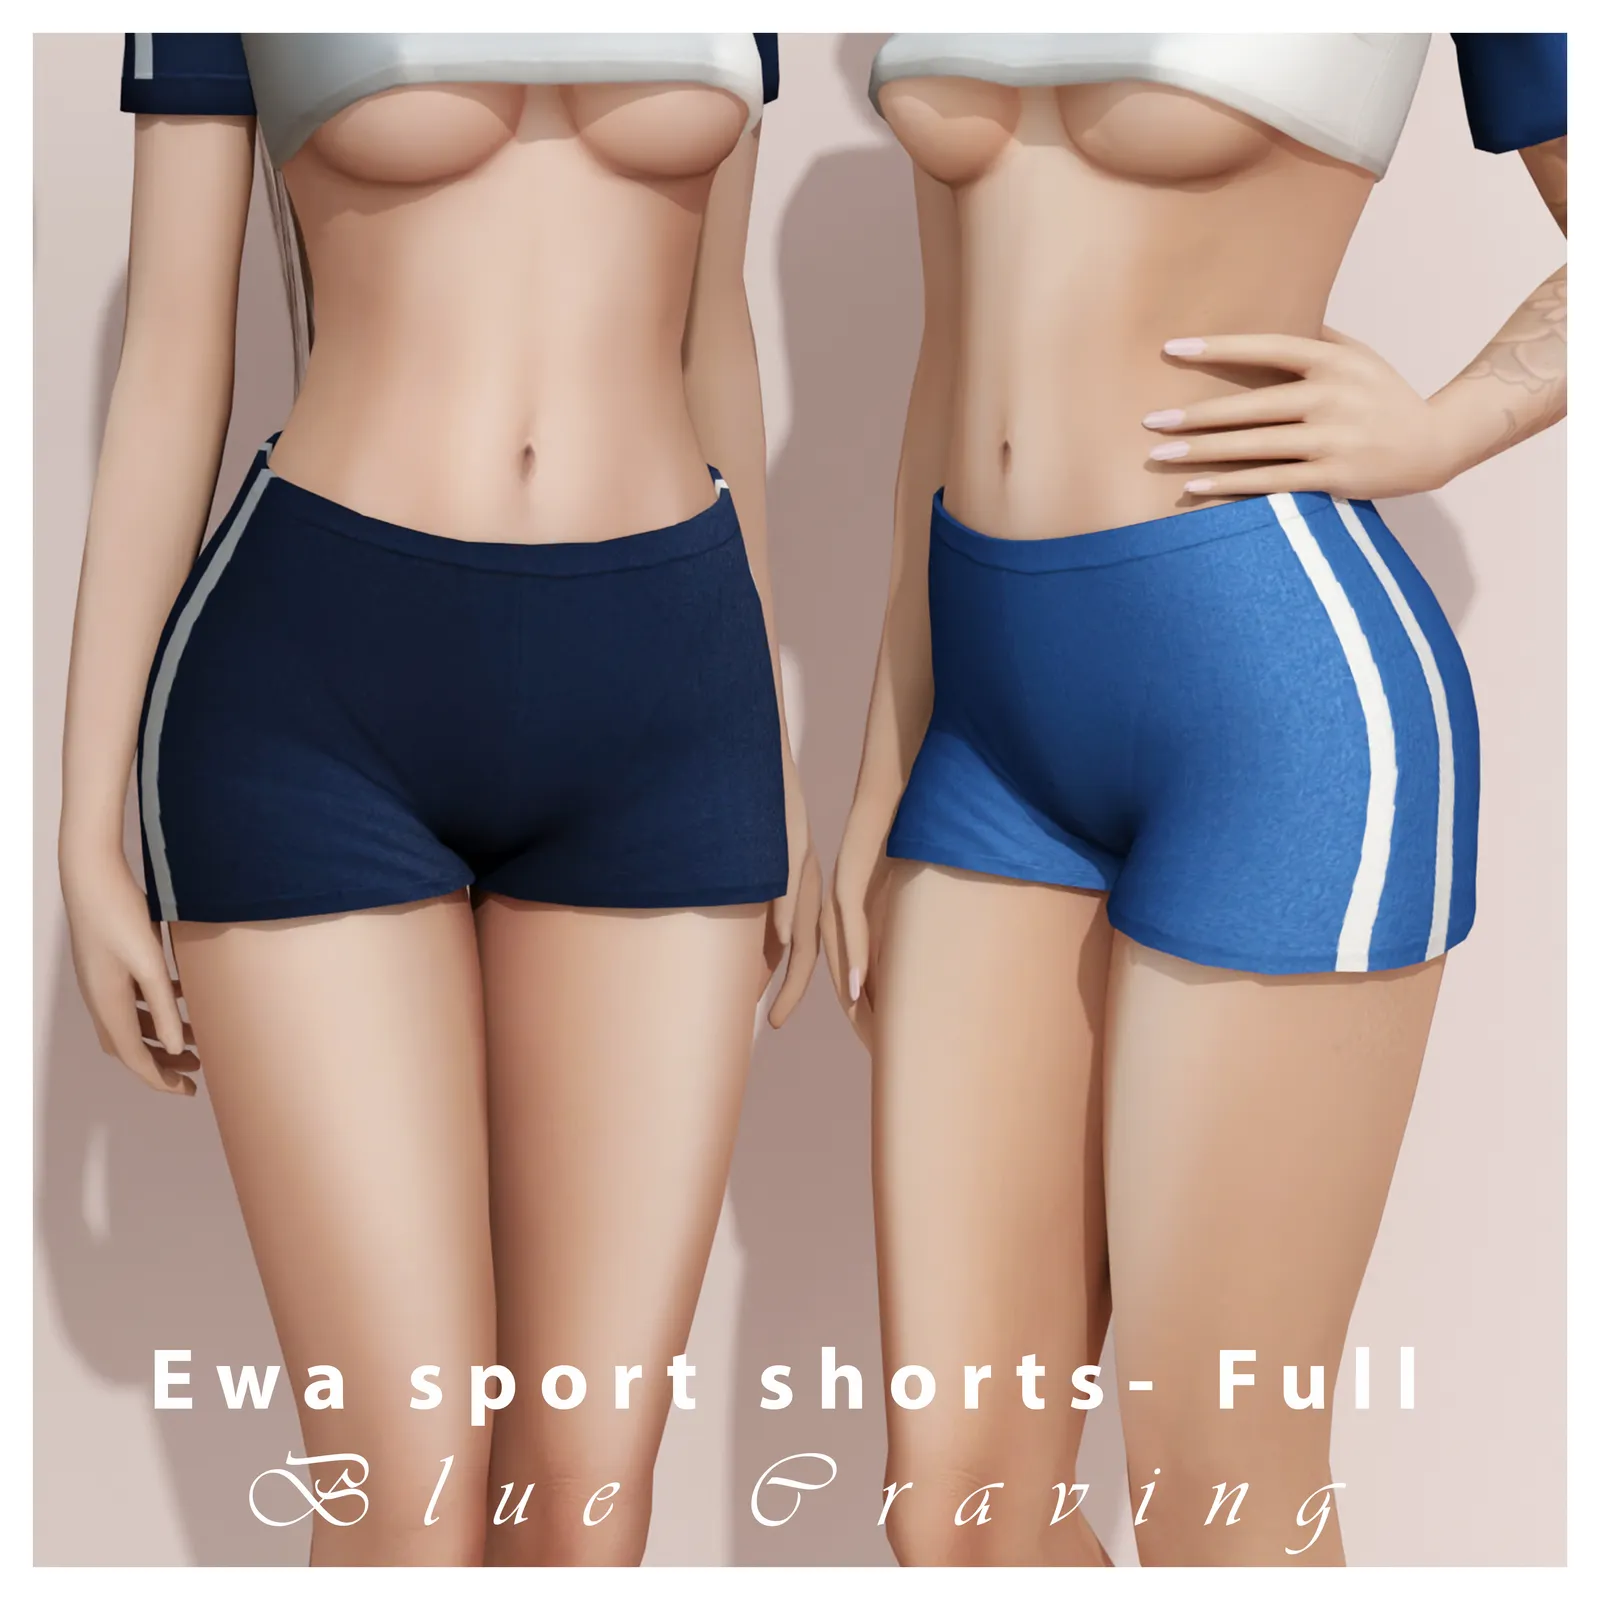 Ewa sport shorts - Full